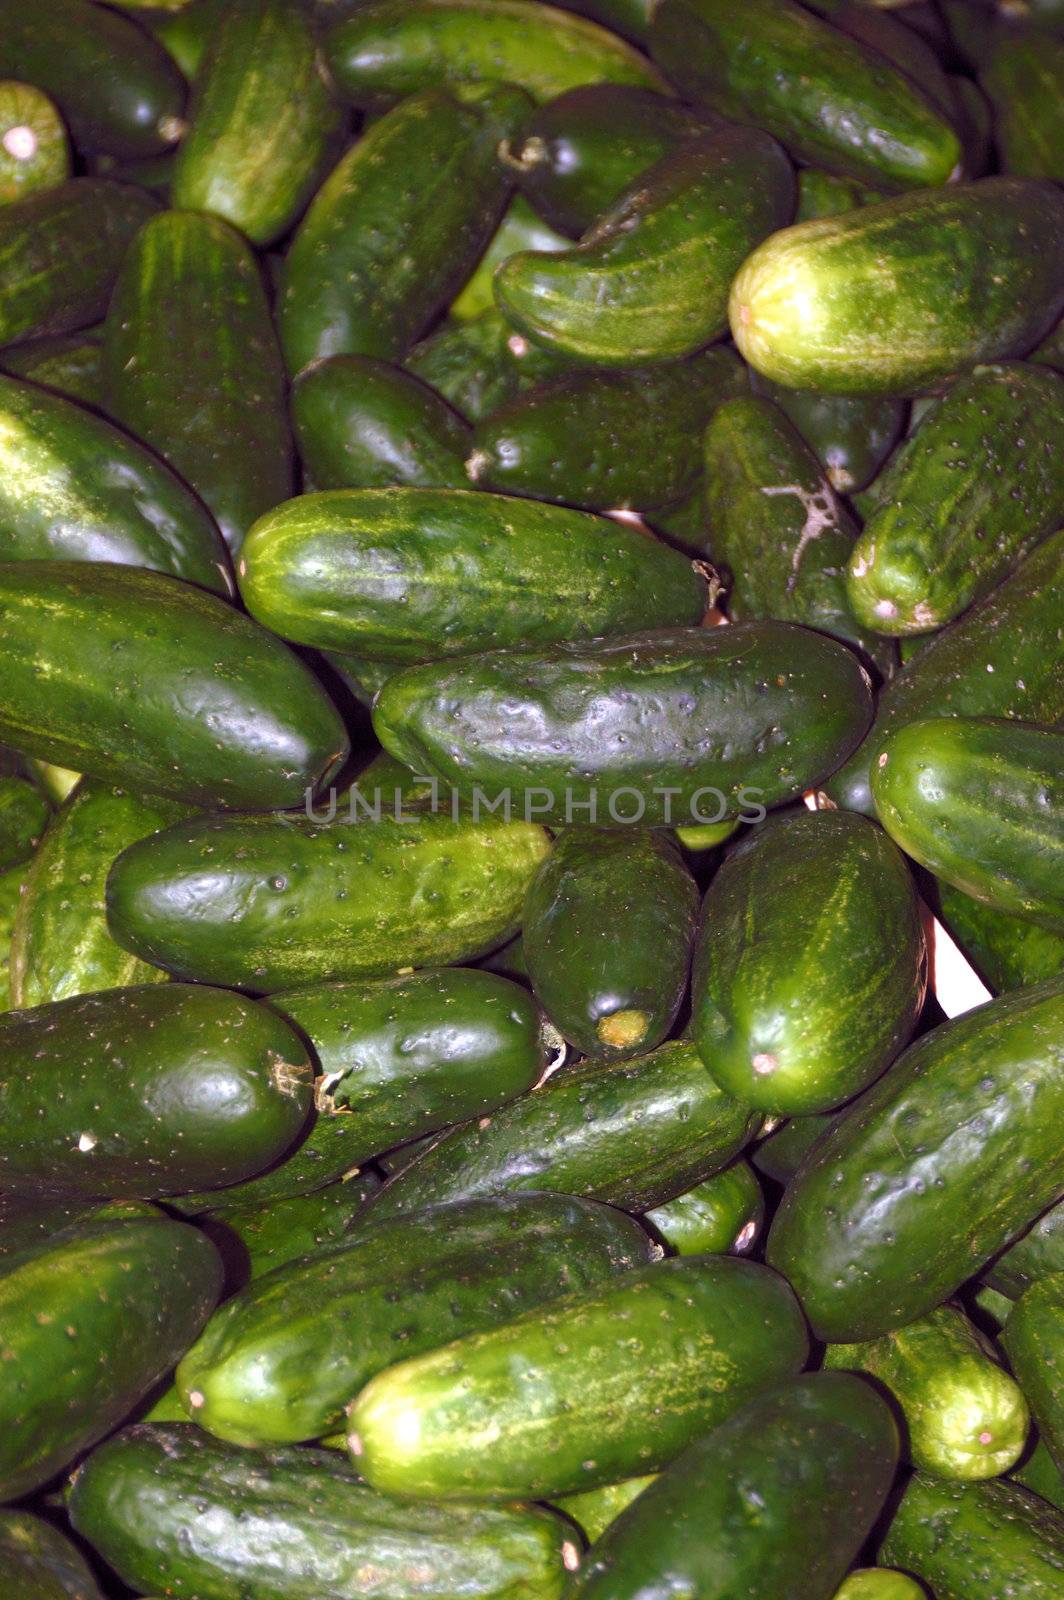 Macro shot of multiple cucumbers back ground